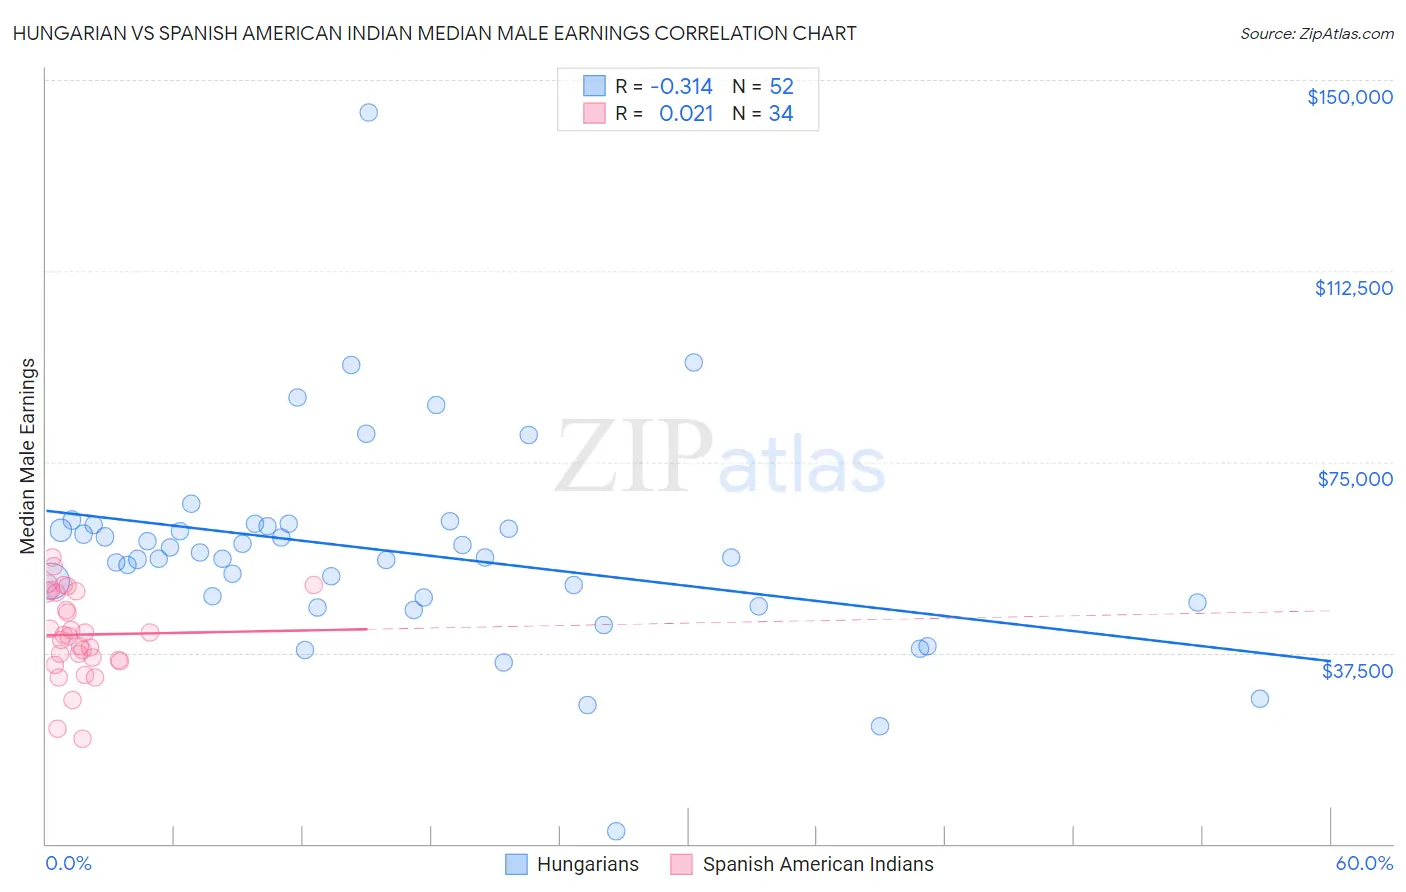 Hungarian vs Spanish American Indian Median Male Earnings